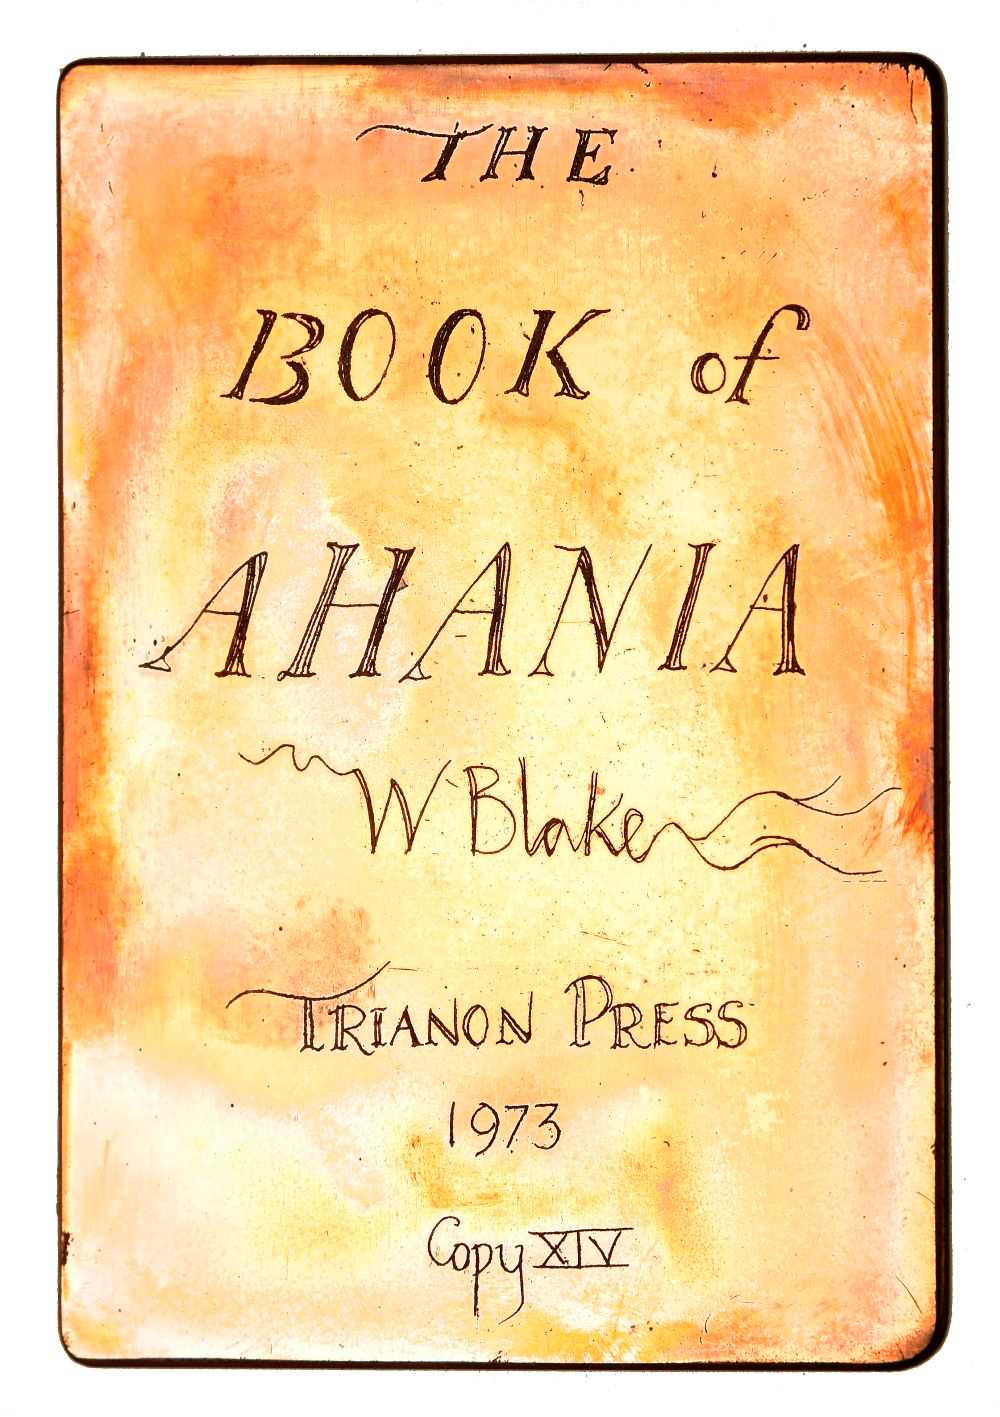 Lot 341 - Blake (William). The Book of Ahania, Trianon Press, 1973